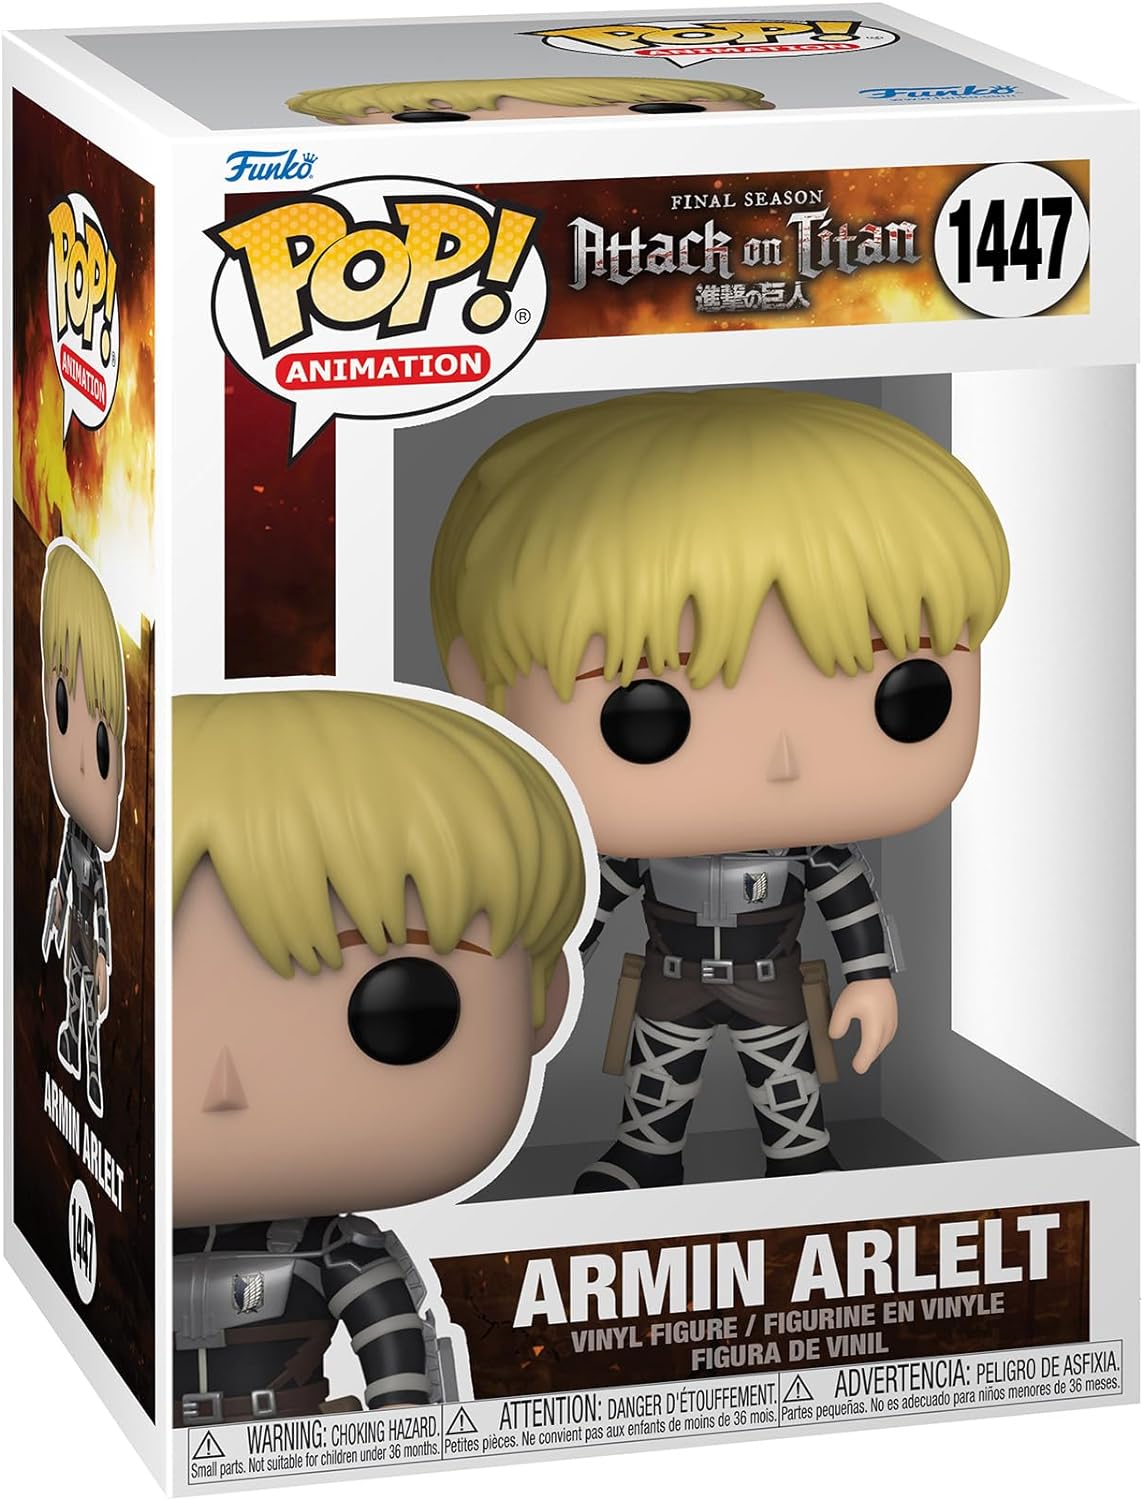 Attack on Titan S5 - 1447 Armin Arlert 9Cm